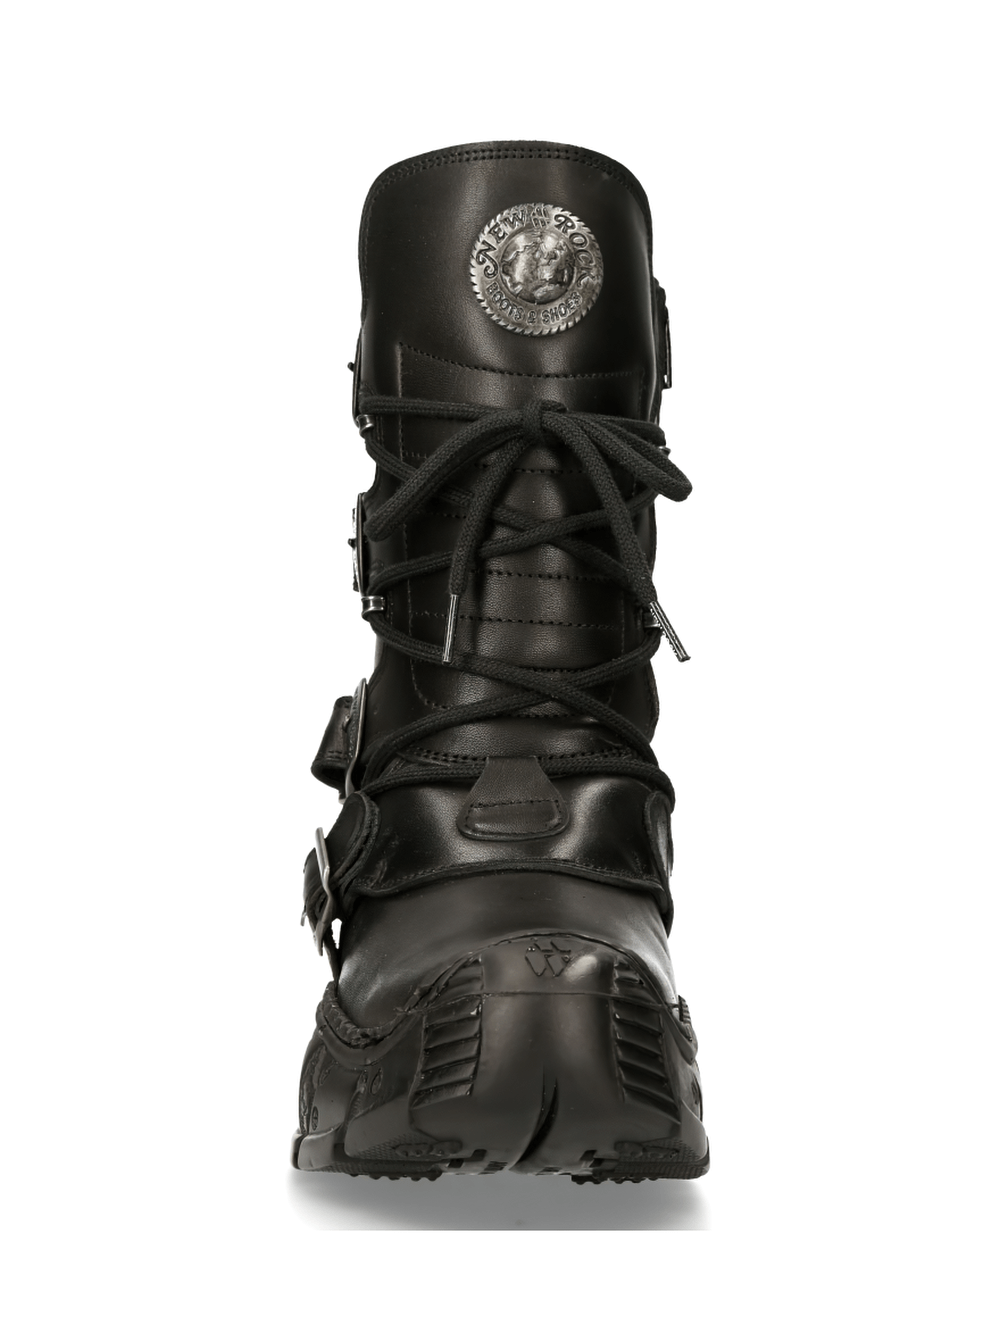 NEW ROCK Unisex Gothic Black Buckled Gothic Impact Boots